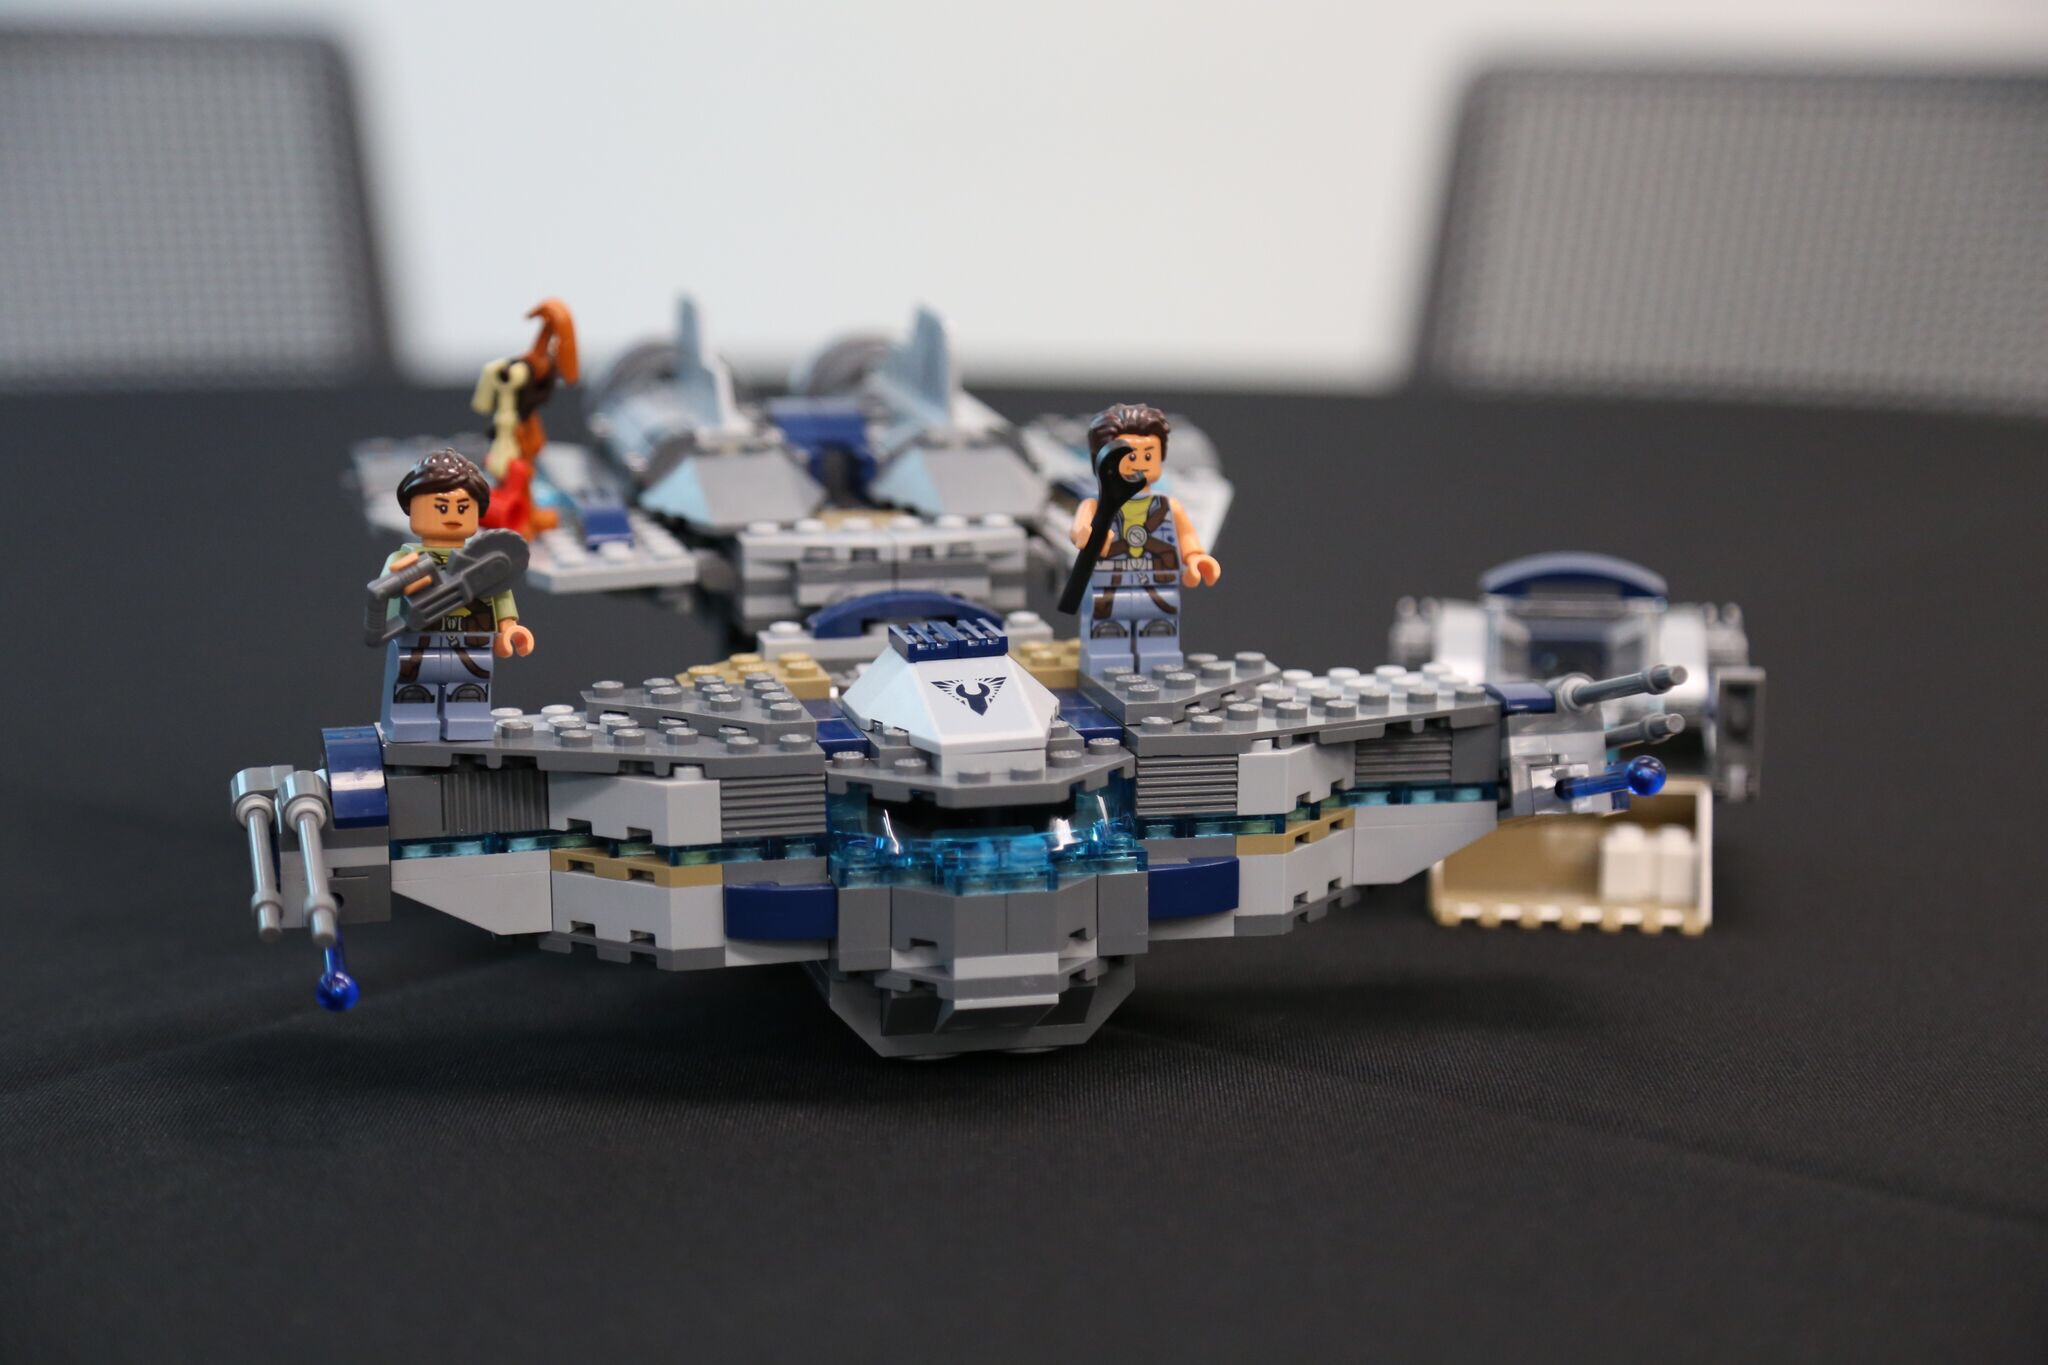 Lego Star Wars Freemaker Adventures Review